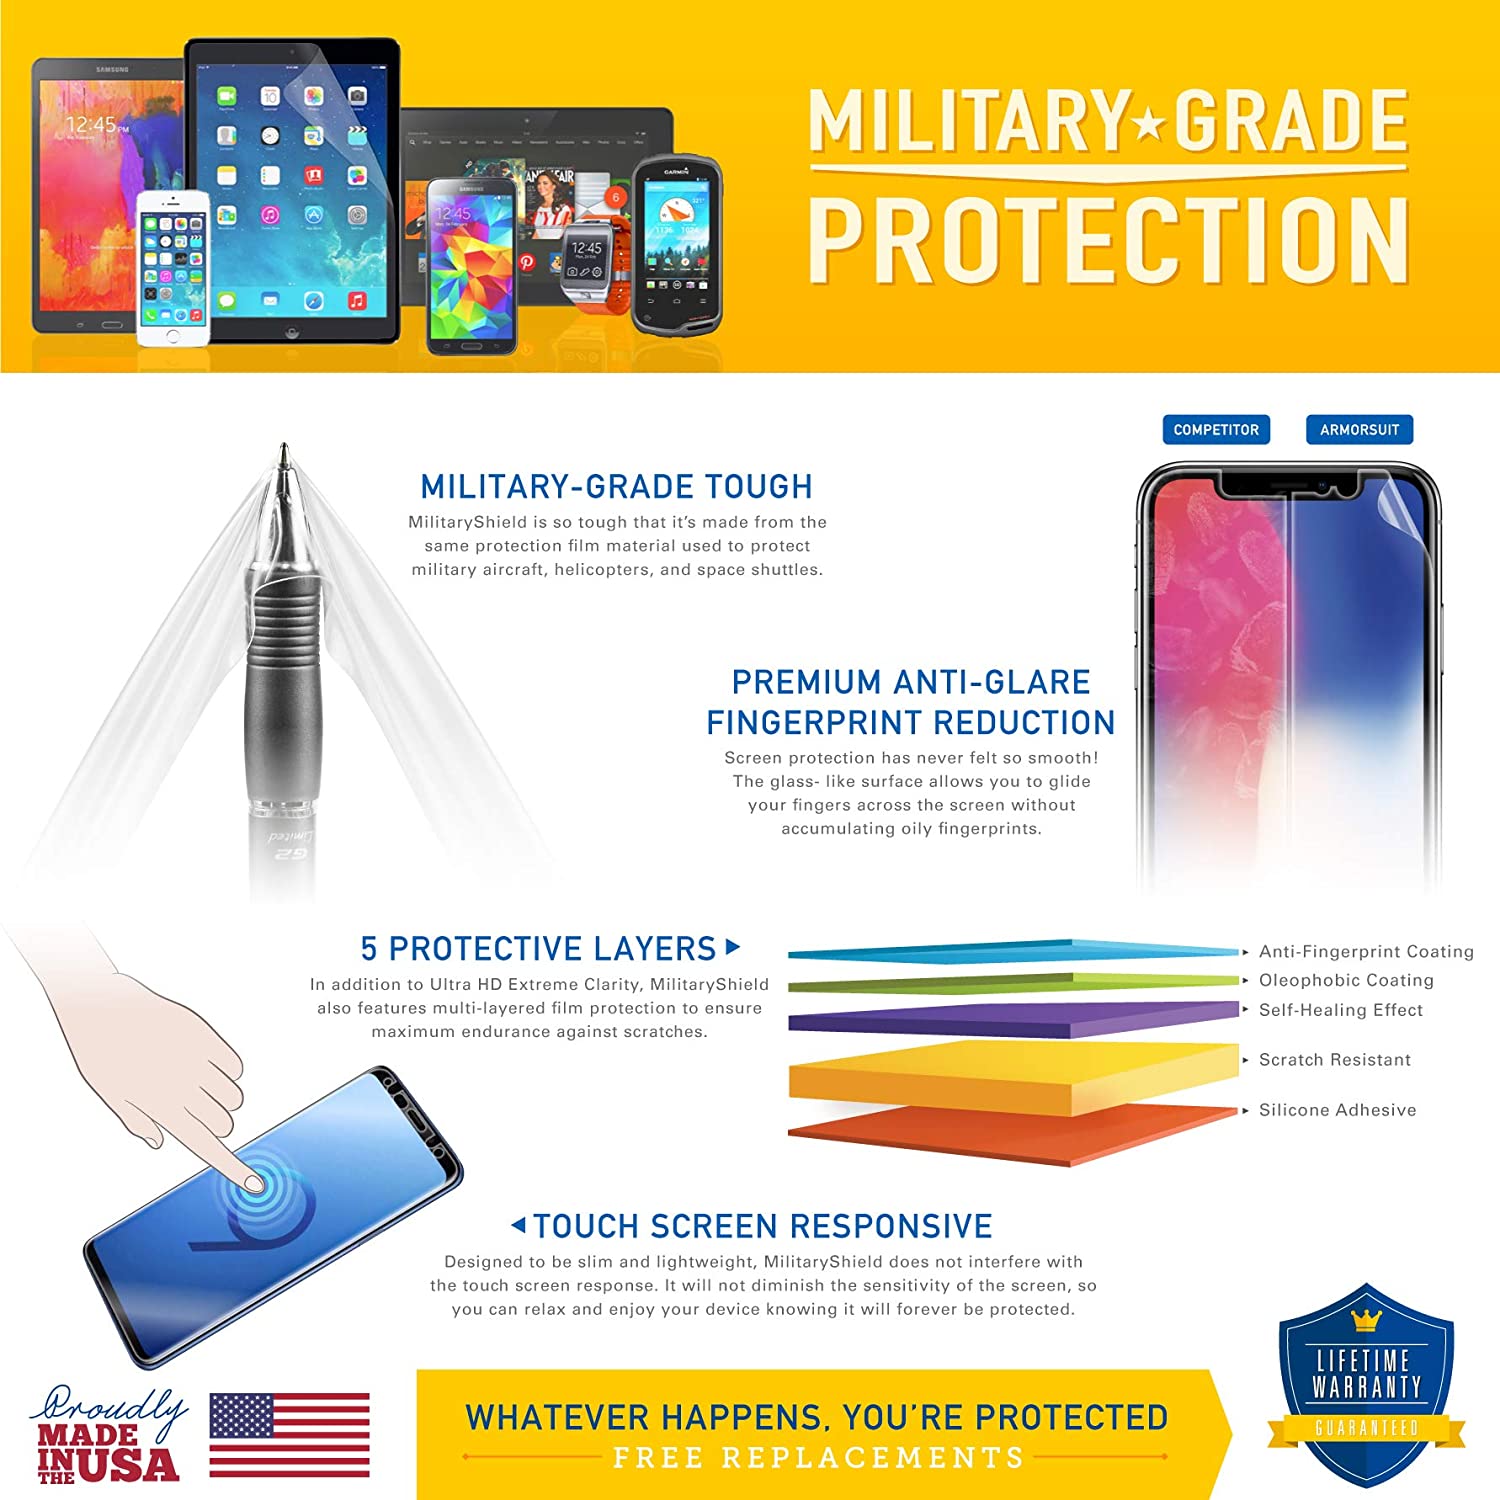 Samsung Focus 2 Screen Protector + Black Carbon Fiber Skin Protector